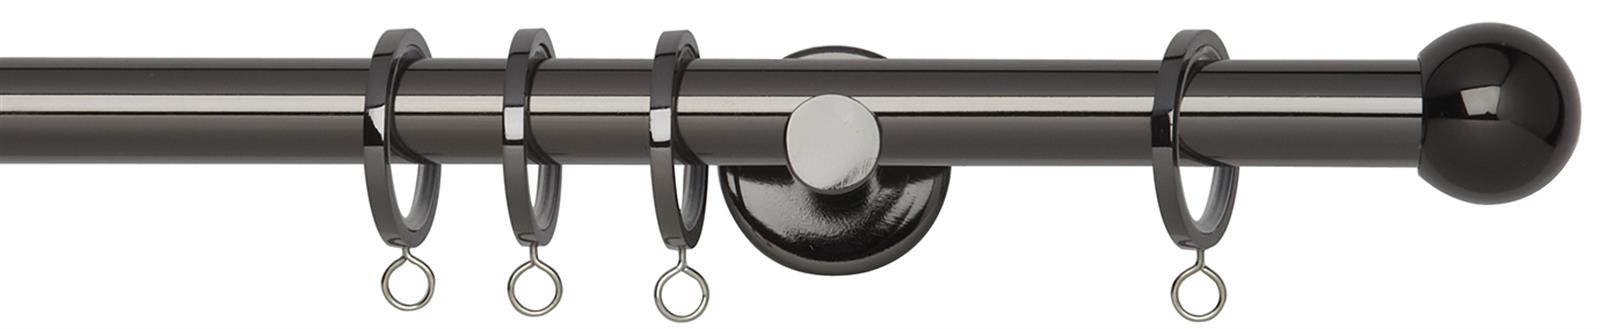 Neo 19mm Pole Black Nickel Ball